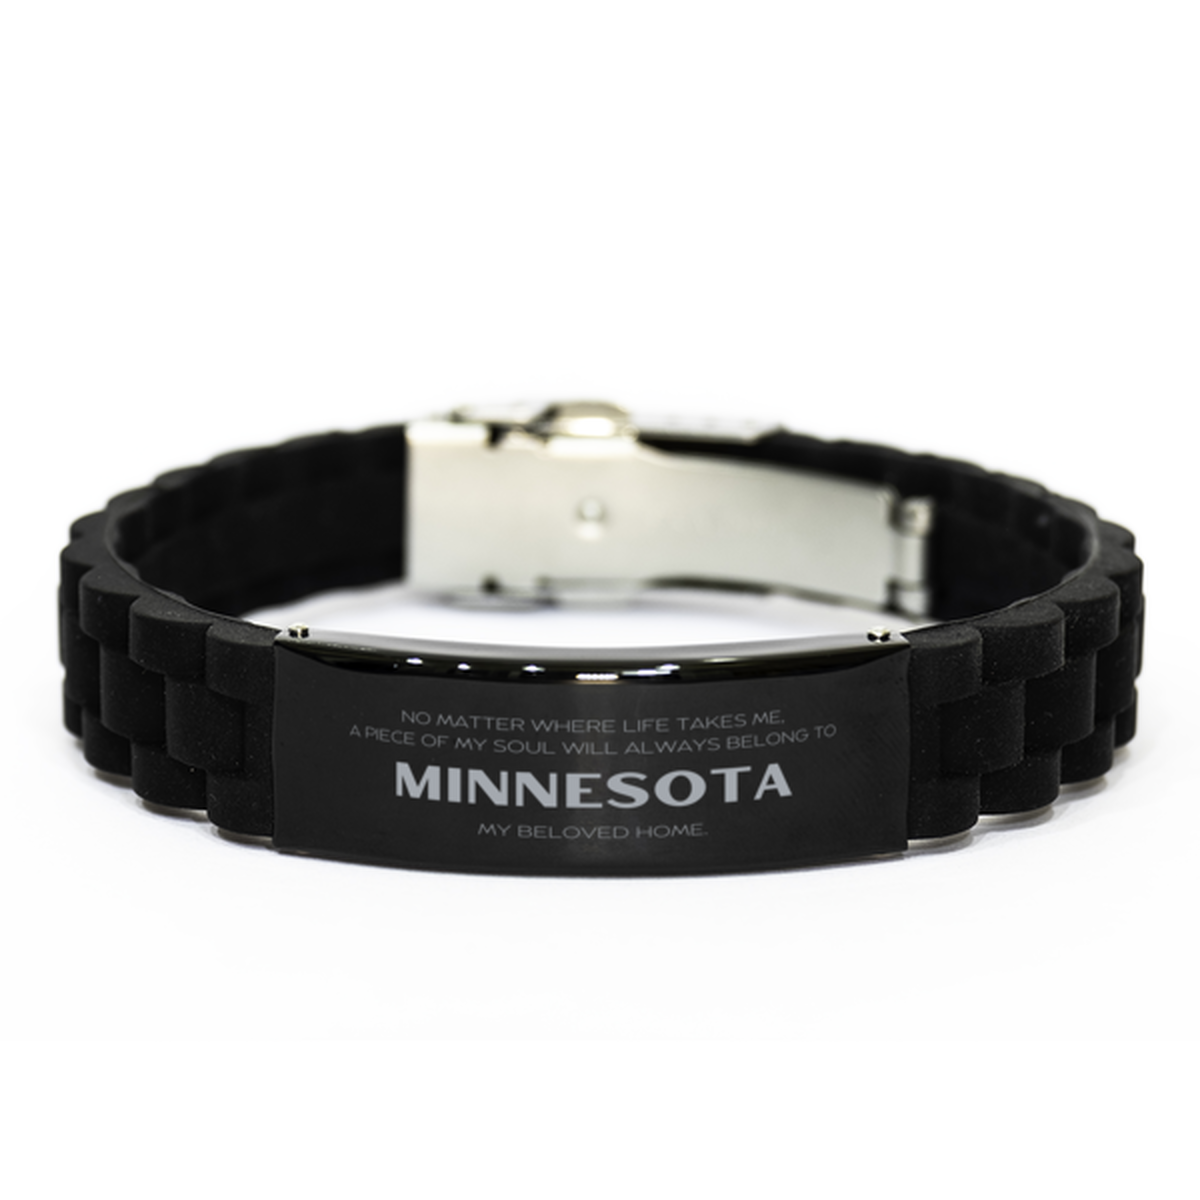 Love Minnesota State Gifts, My soul will always belong to Minnesota, Proud Black Glidelock Clasp Bracelet, Birthday Unique Gifts For Minnesota Men, Women, Friends